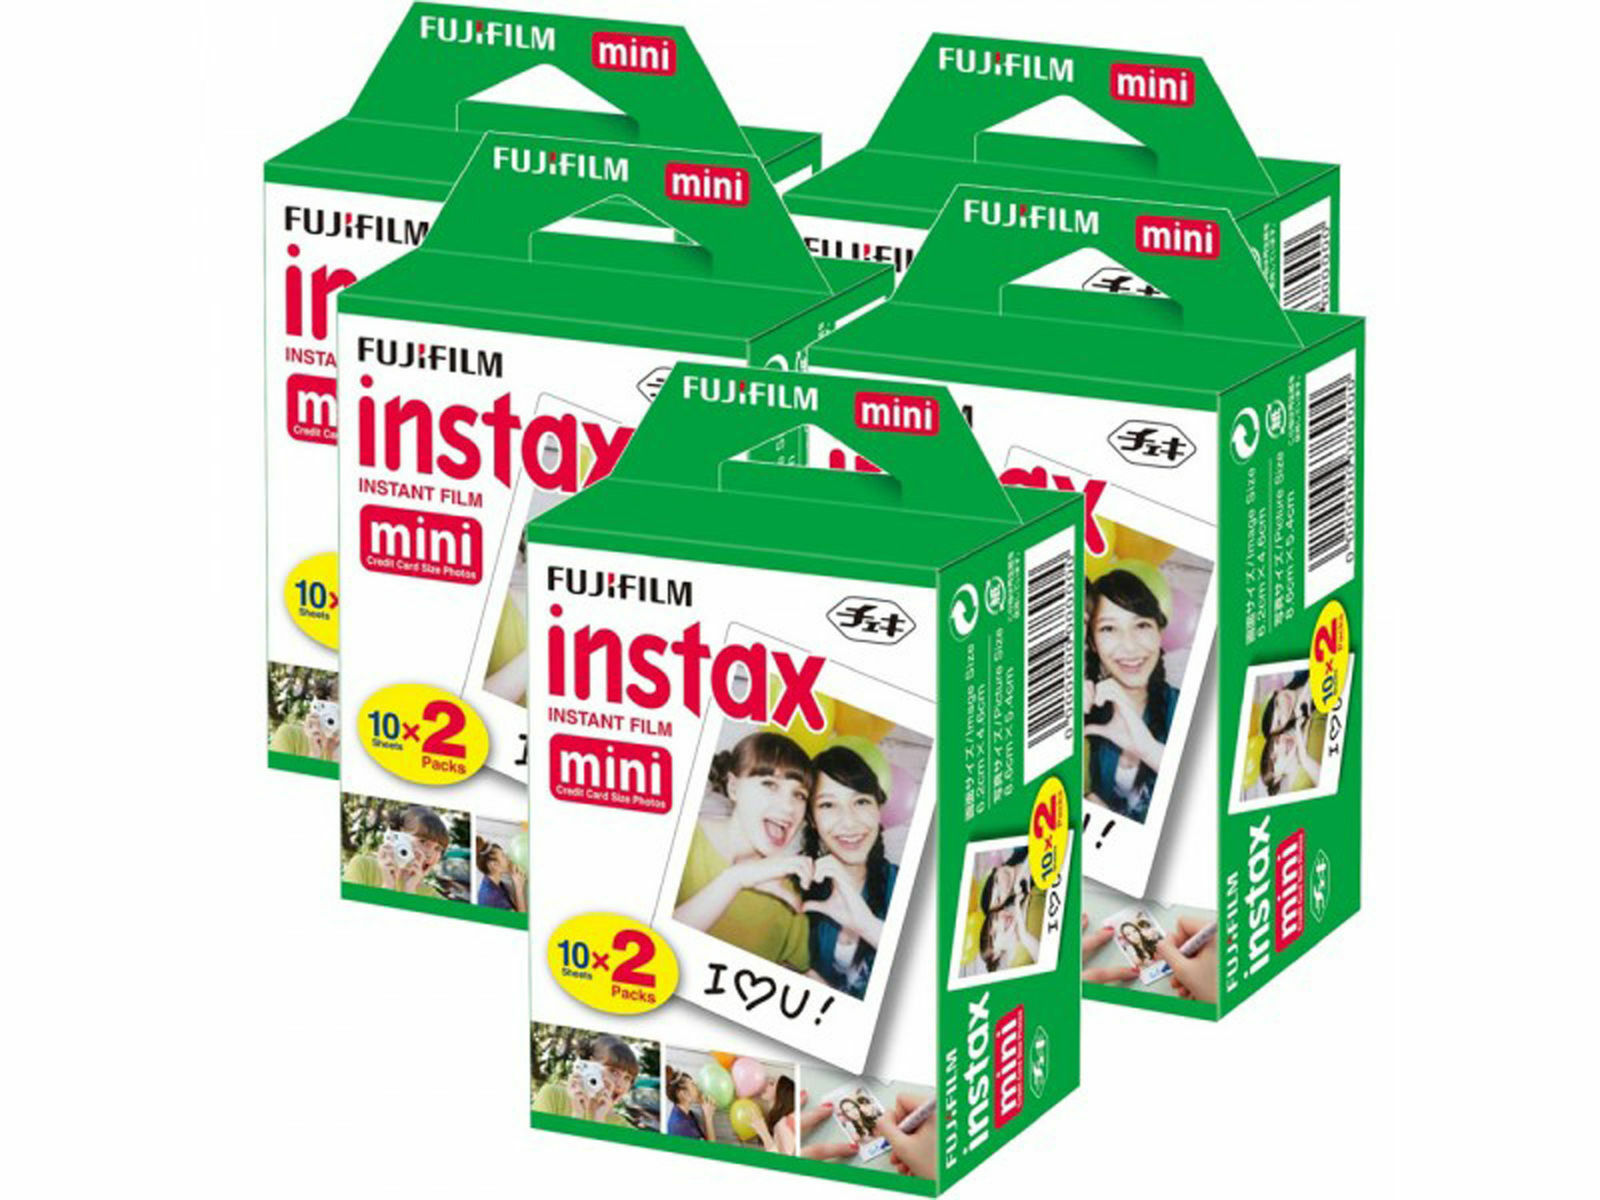 20-40-60-80 & 100 Prints Fujifilm Instax Instant Film For Fuji Mini 8 & 9 Camera